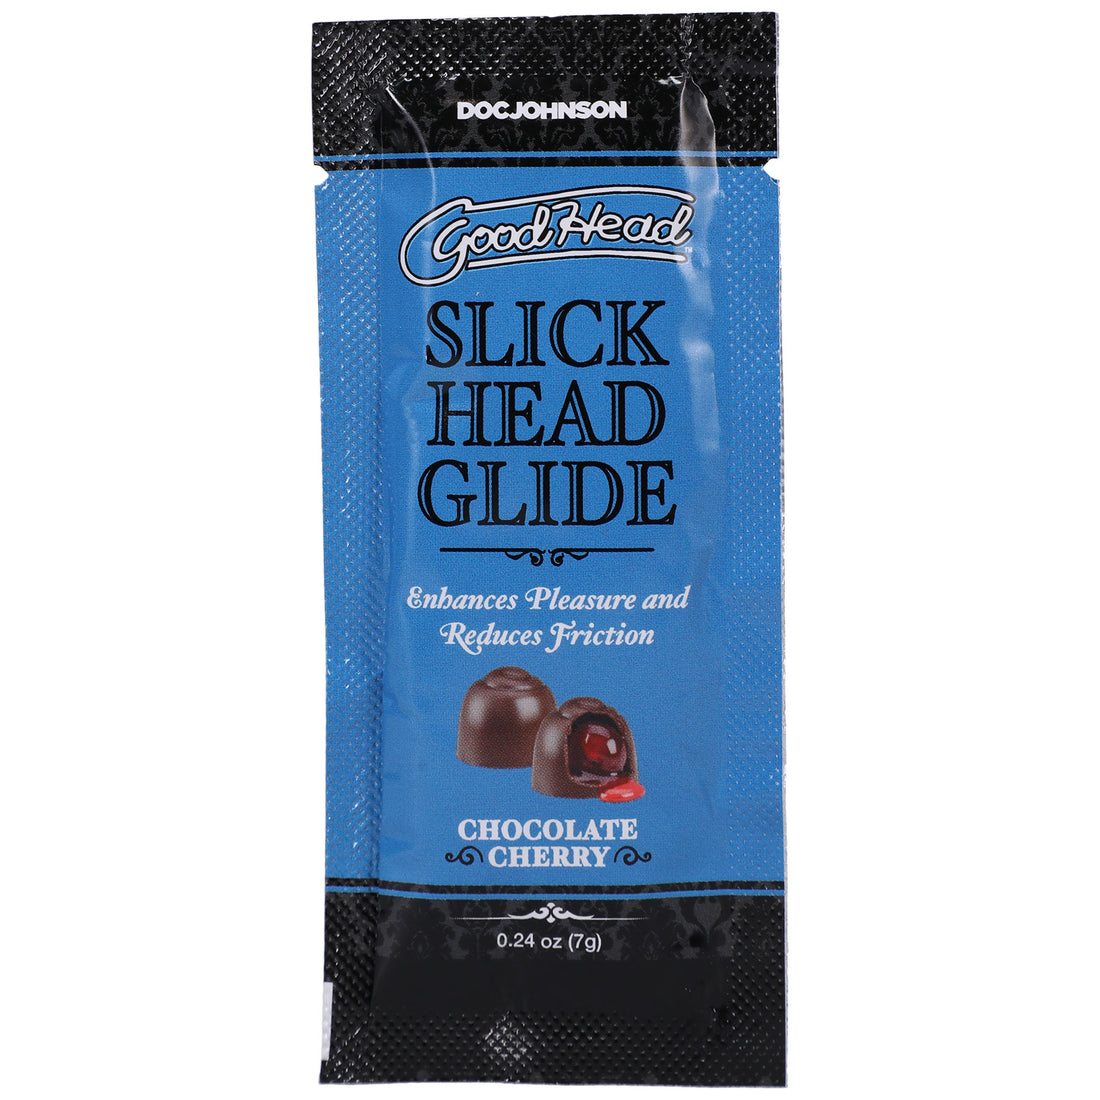 Goodhead - Slick Head Glide - Chocolate Cherry -  0.24 Oz DJ1387-16-BU